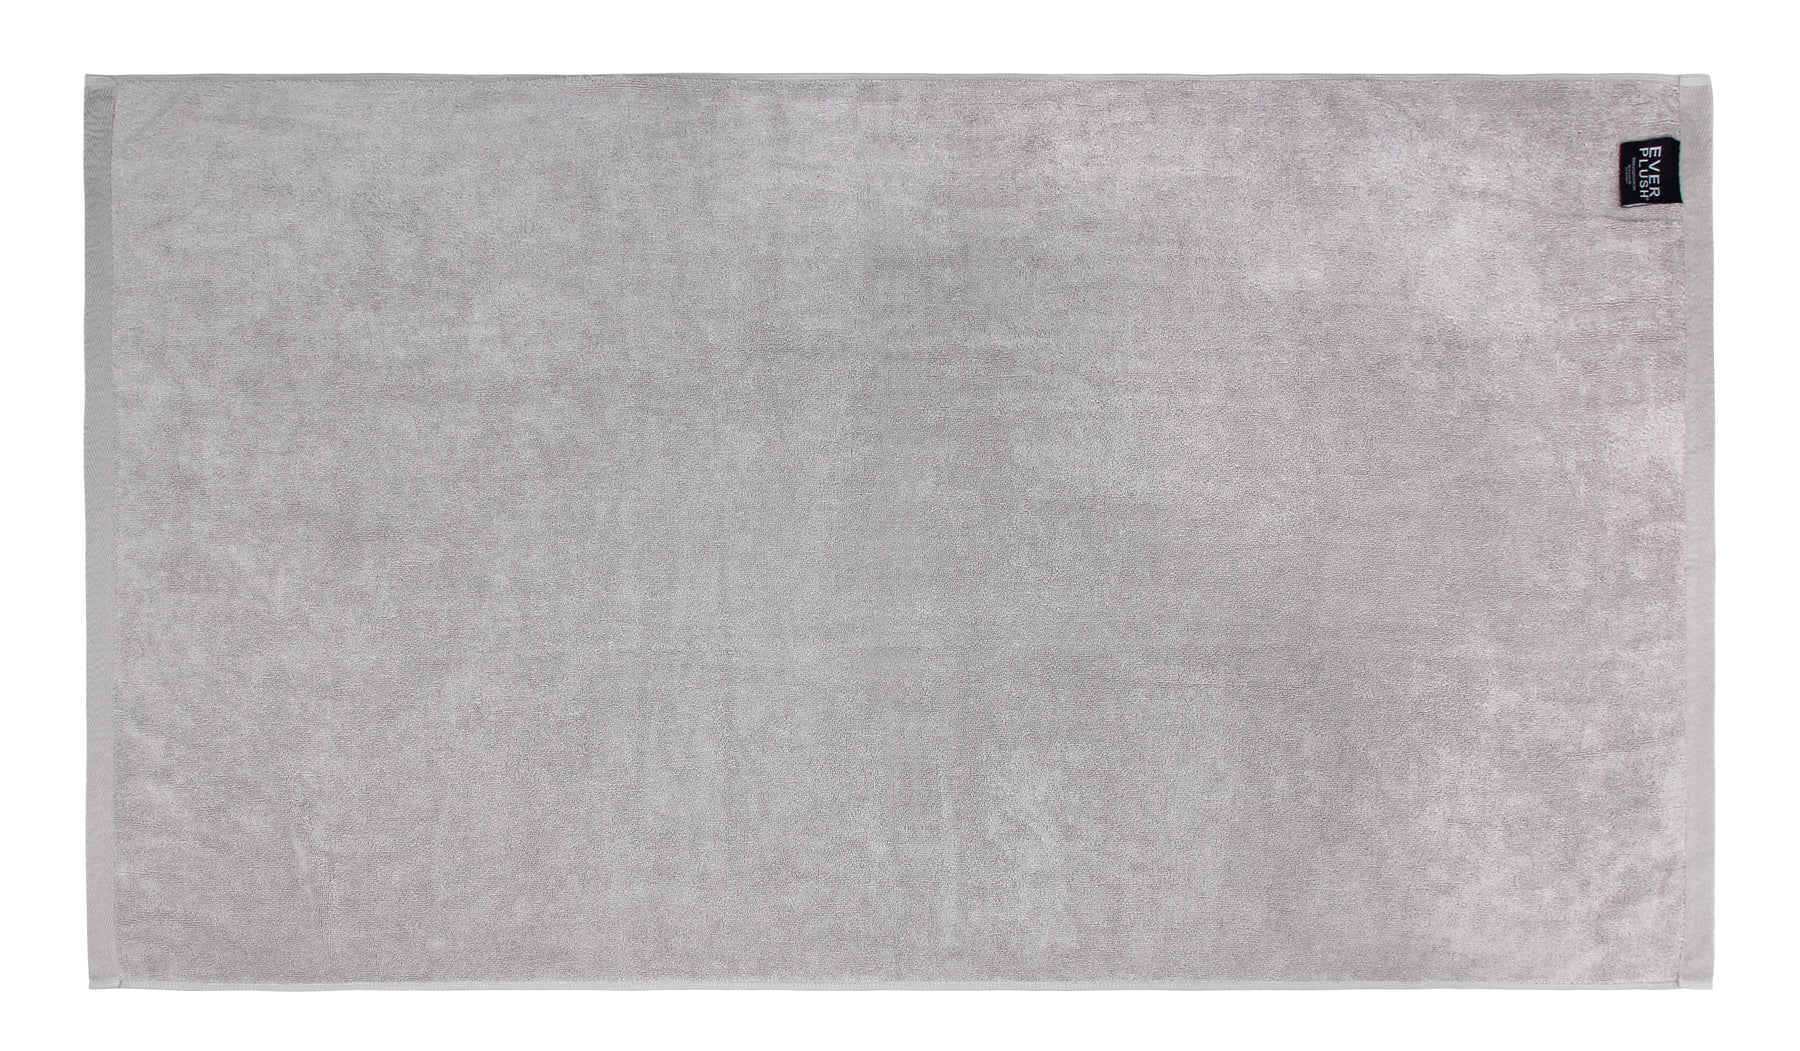 Flat Loop Bath Towel - 1 Piece, Porcelain (White) – The Everplush Company